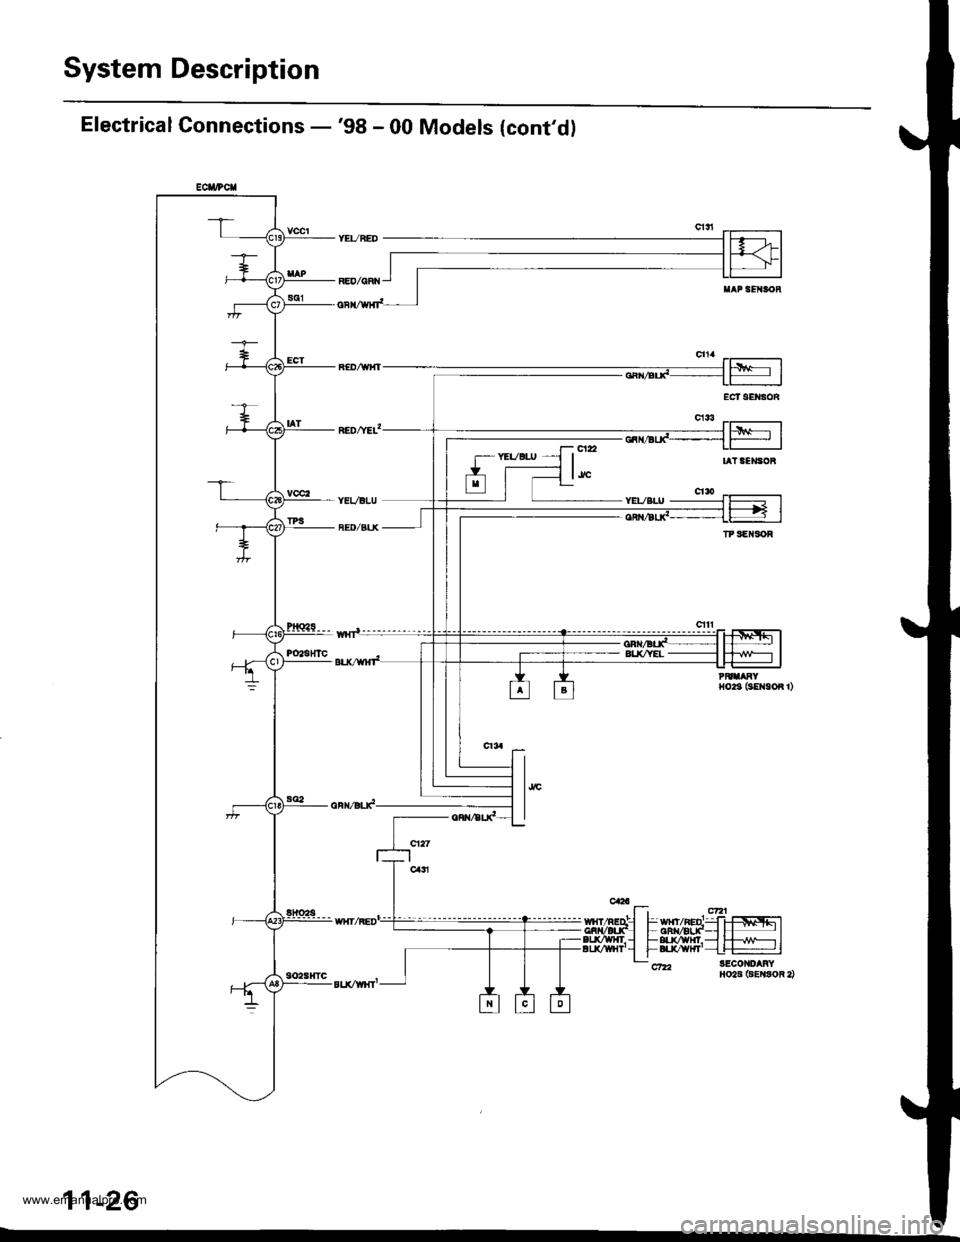 HONDA CR-V 1999 RD1-RD3 / 1.G Workshop Manual 
System Description
Electrical Connections - 98 - 00 Models (contdl
!to2srficSECOiD hYHO2a (aE toh 2)
11-26
G]-l
ct sEt{goh
 c14t
I J/C
llo23 (SEltgOi O
l-
www.emanualpro.com  